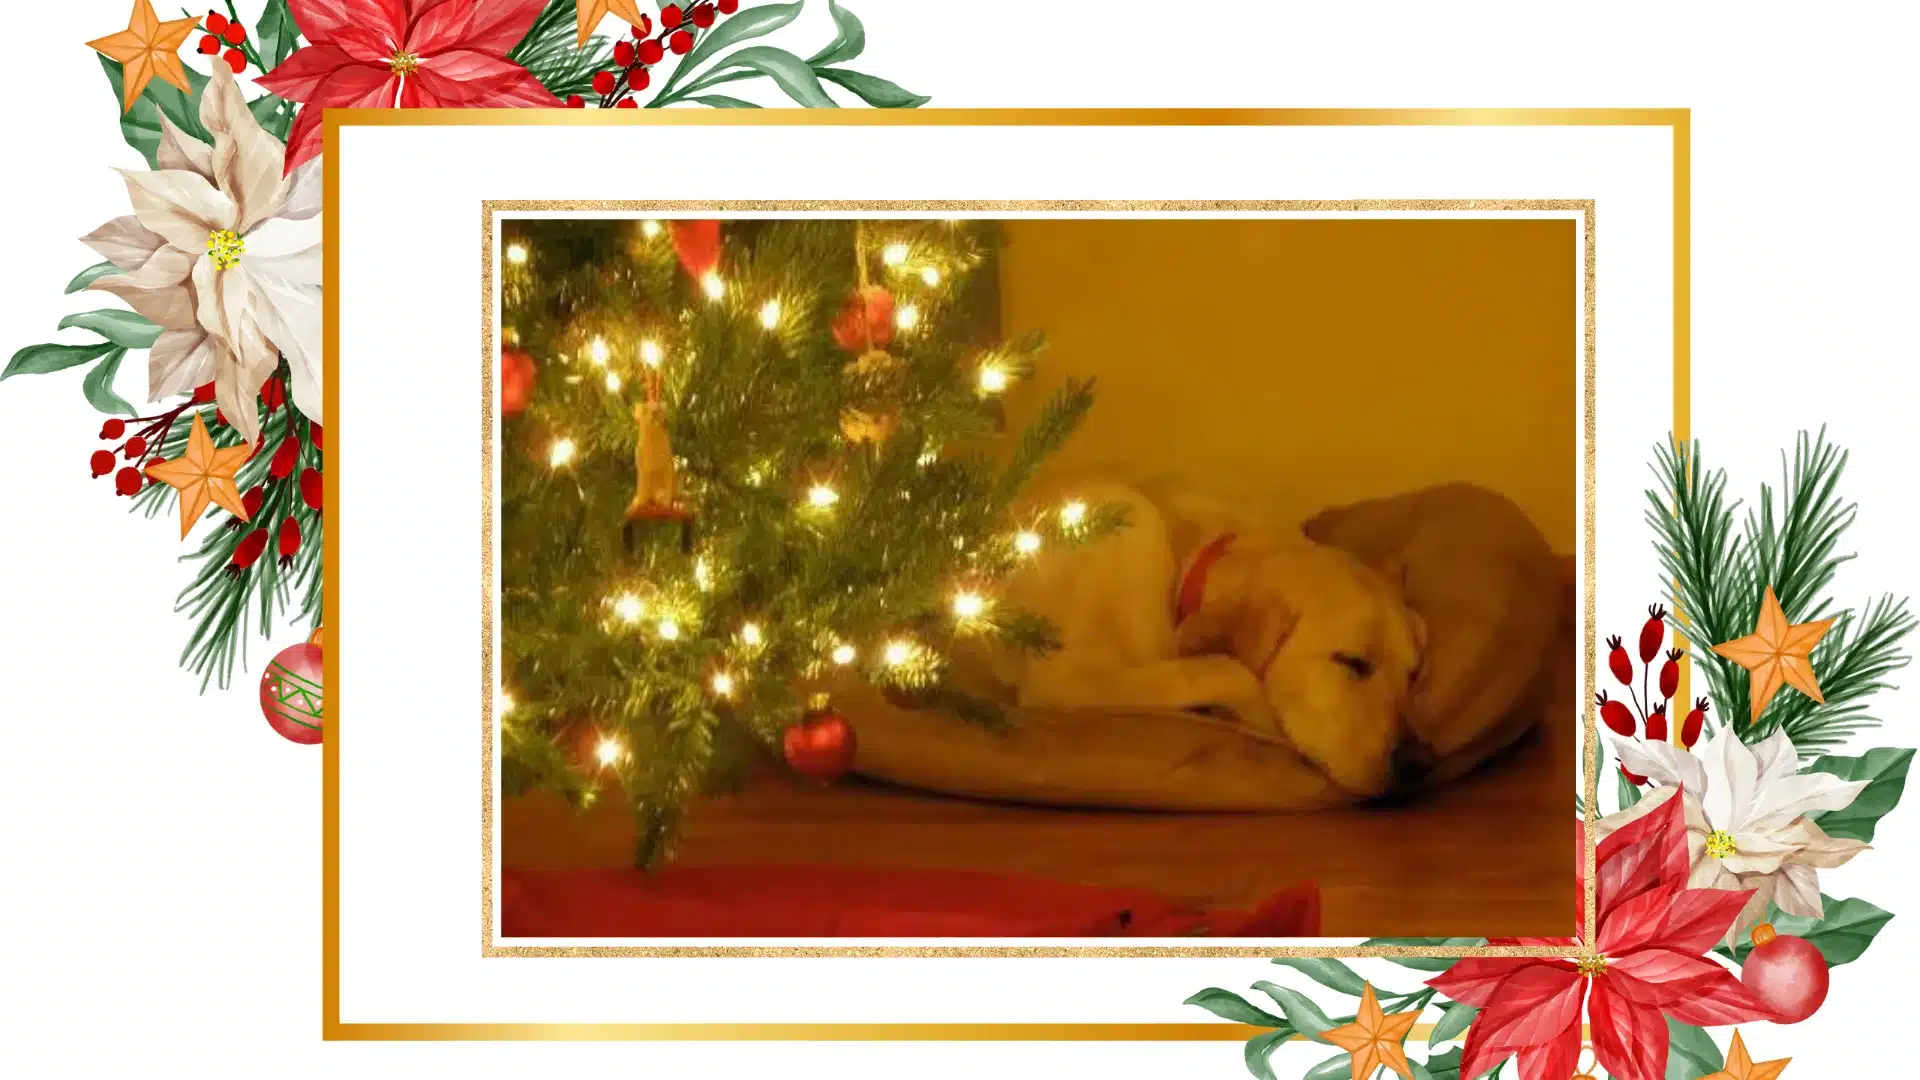 our yellow labrador retriever asleep under the Christmas tree